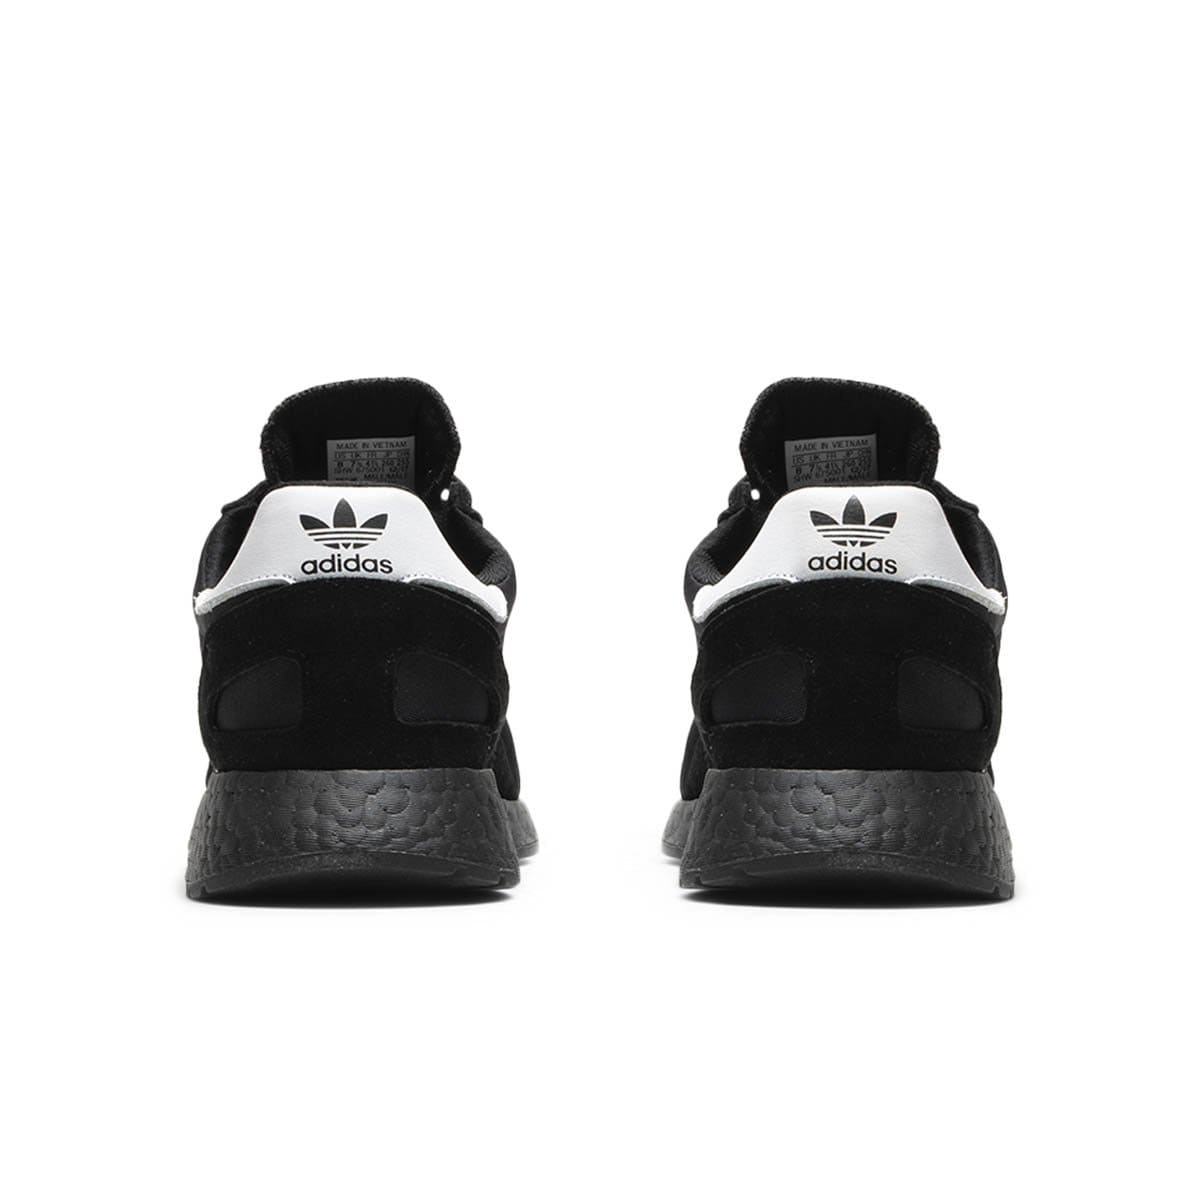 adidas Shoes CBLACK,FTWWHT,COPPMT / 8 INIKI RUNNER